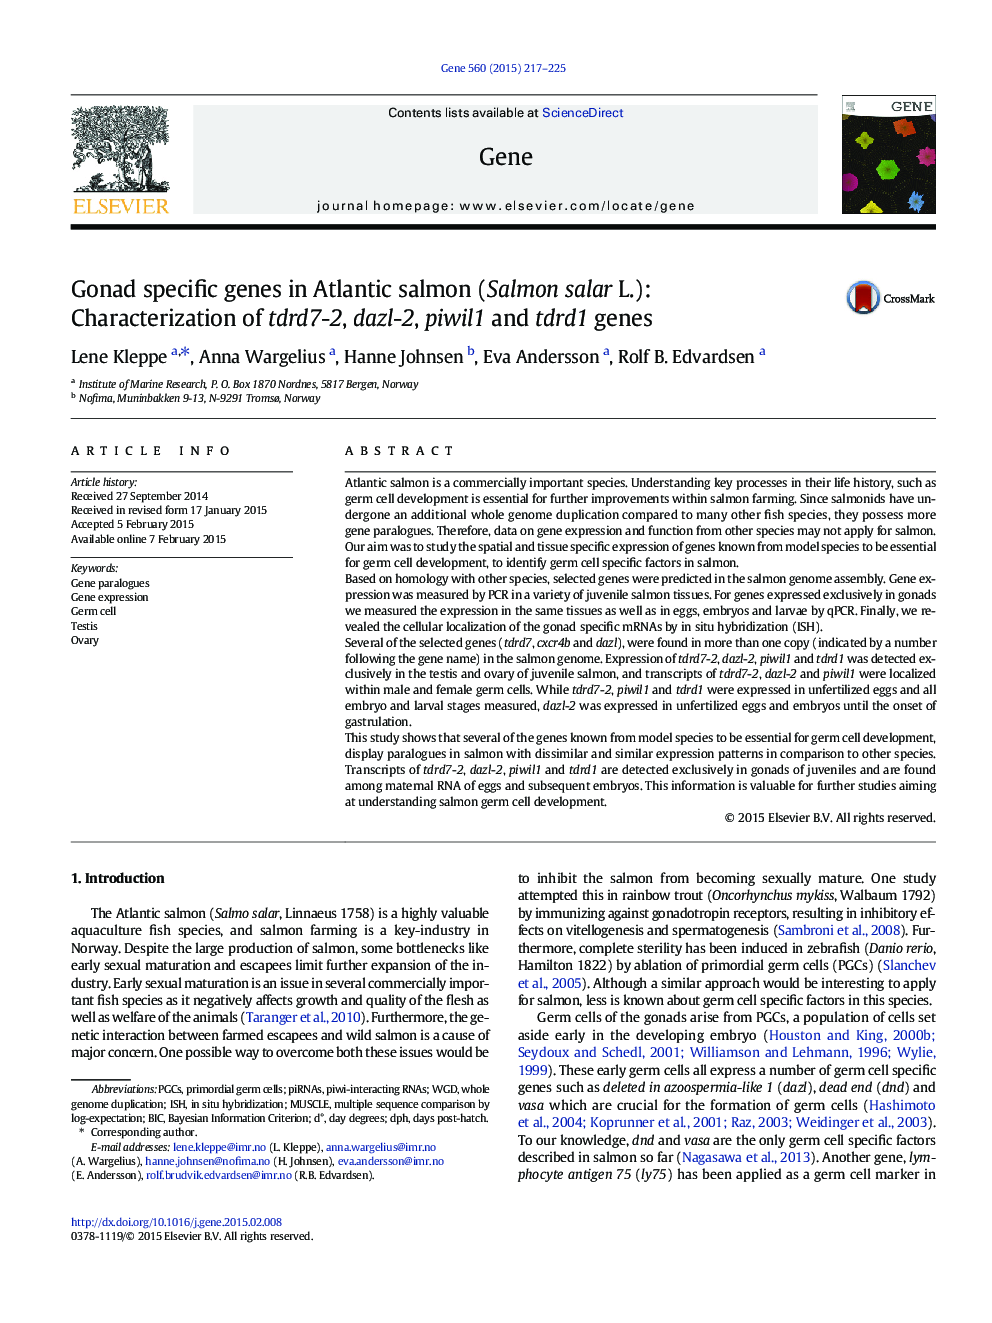 Gonad specific genes in Atlantic salmon (Salmon salar L.): Characterization of tdrd7-2, dazl-2, piwil1 and tdrd1 genes